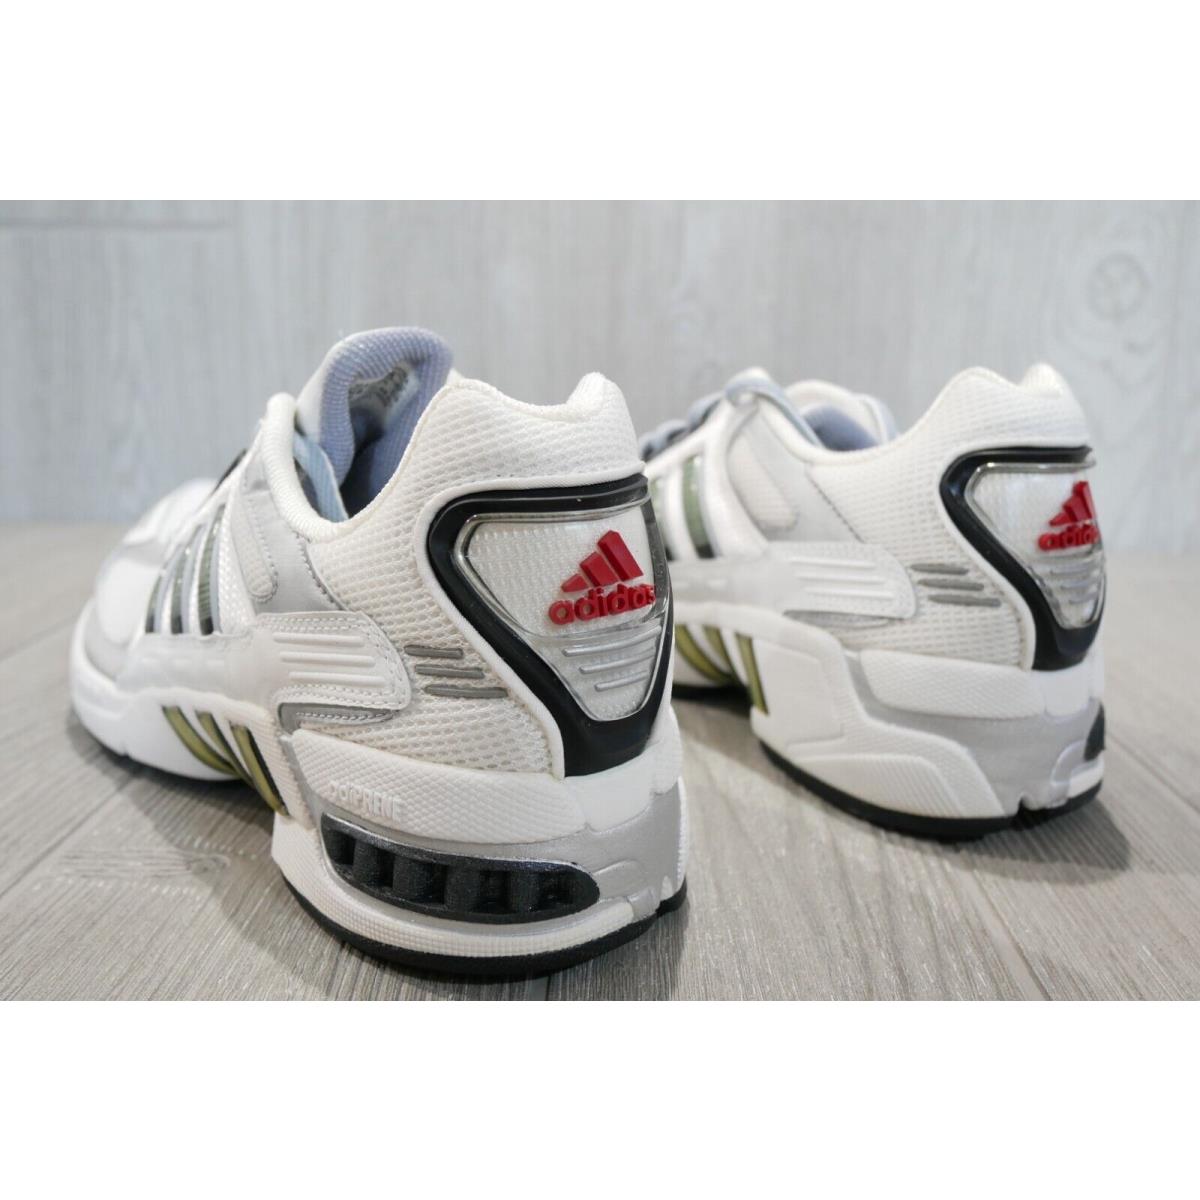 Adidas shoes Response - White 3